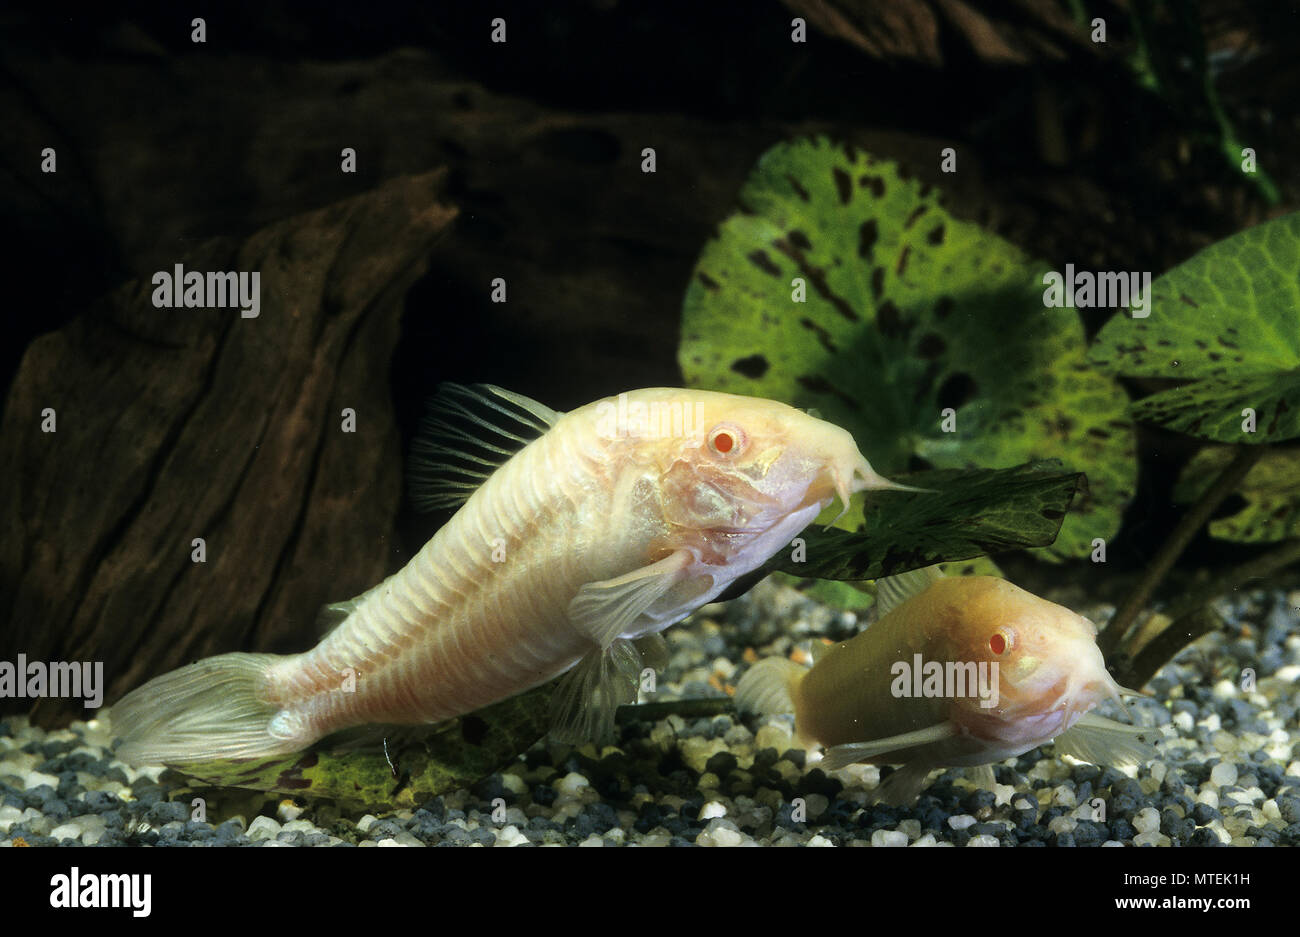 Albino-Panzerwels, Albinopanzerwels, Corydoras spec., Panzerwelse, Callichthyidae Stock Photo